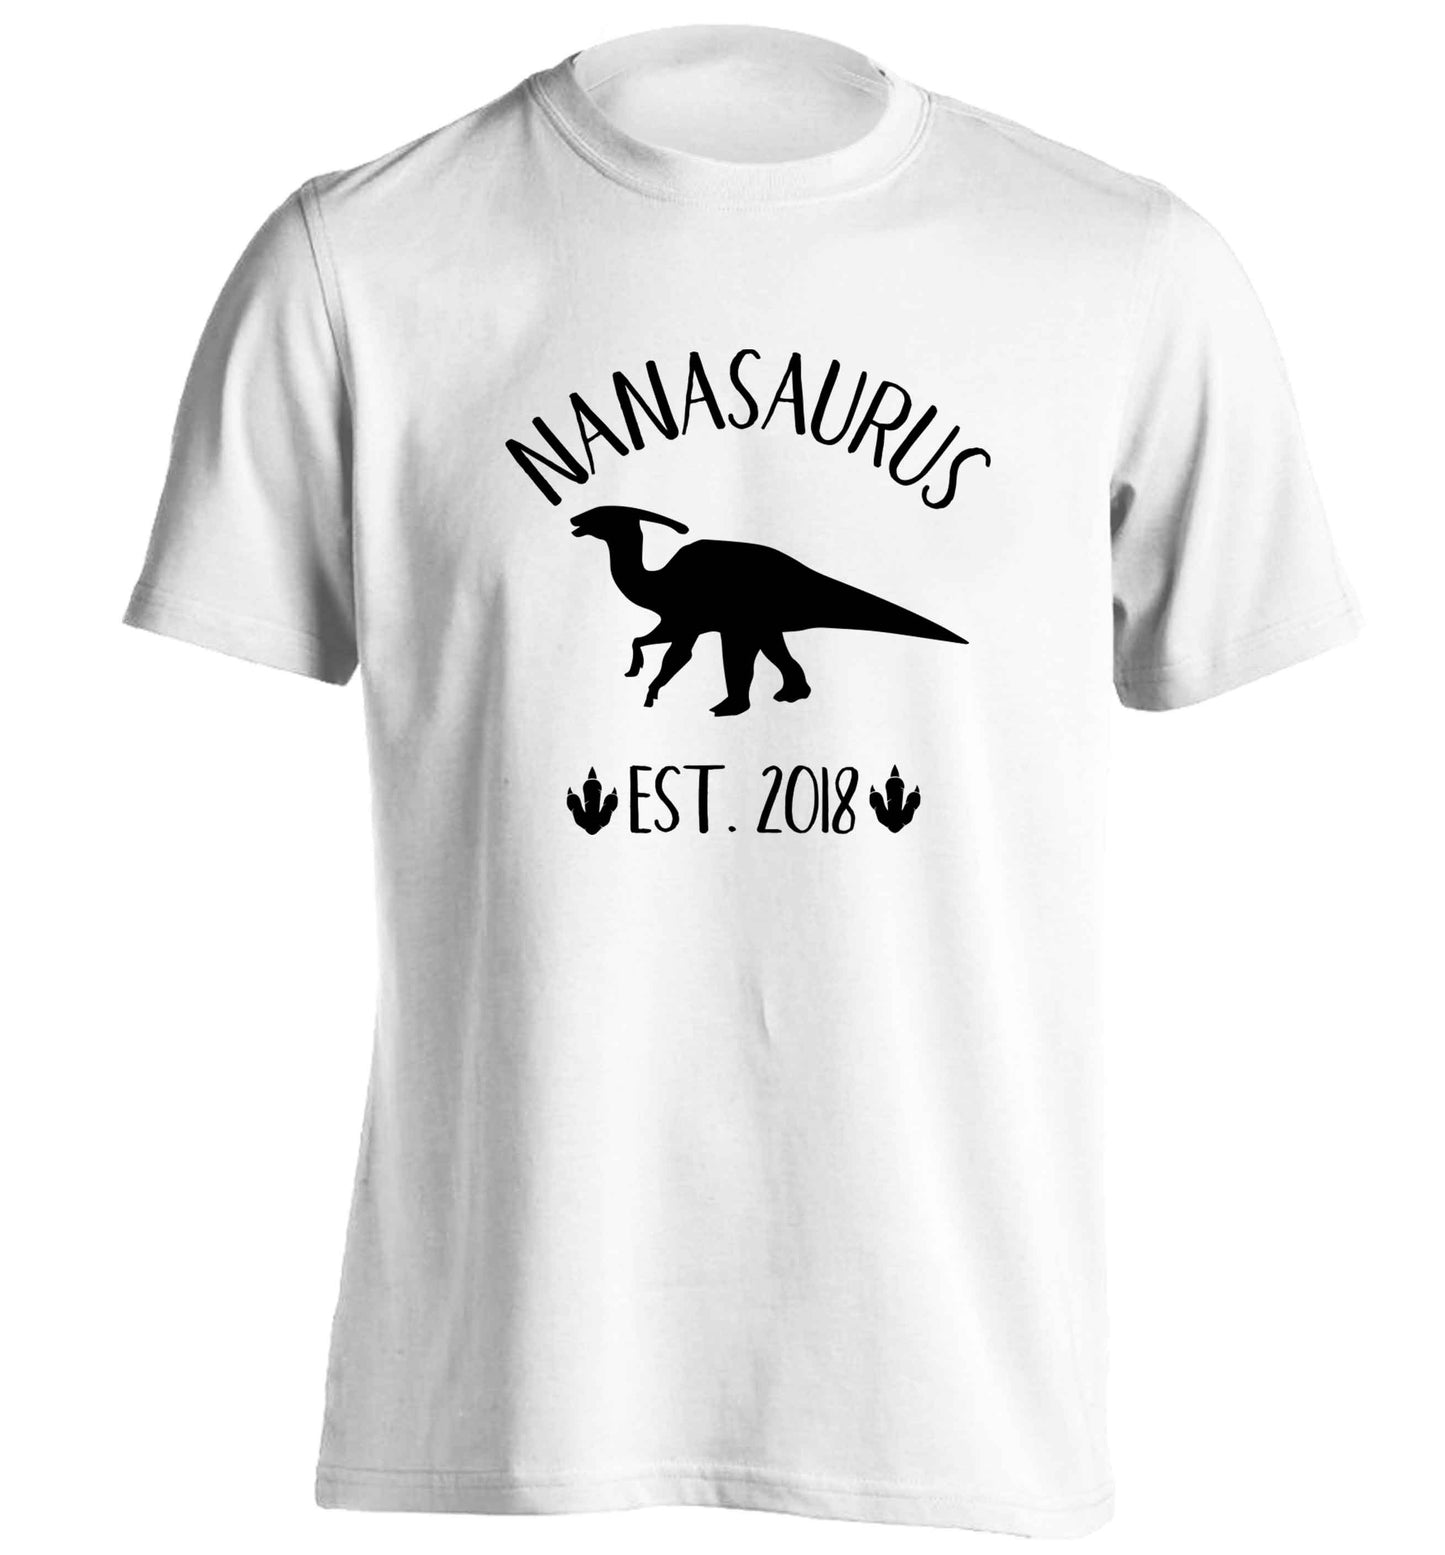 Personalised nanasaurus since (custom date) adults unisex white Tshirt 2XL